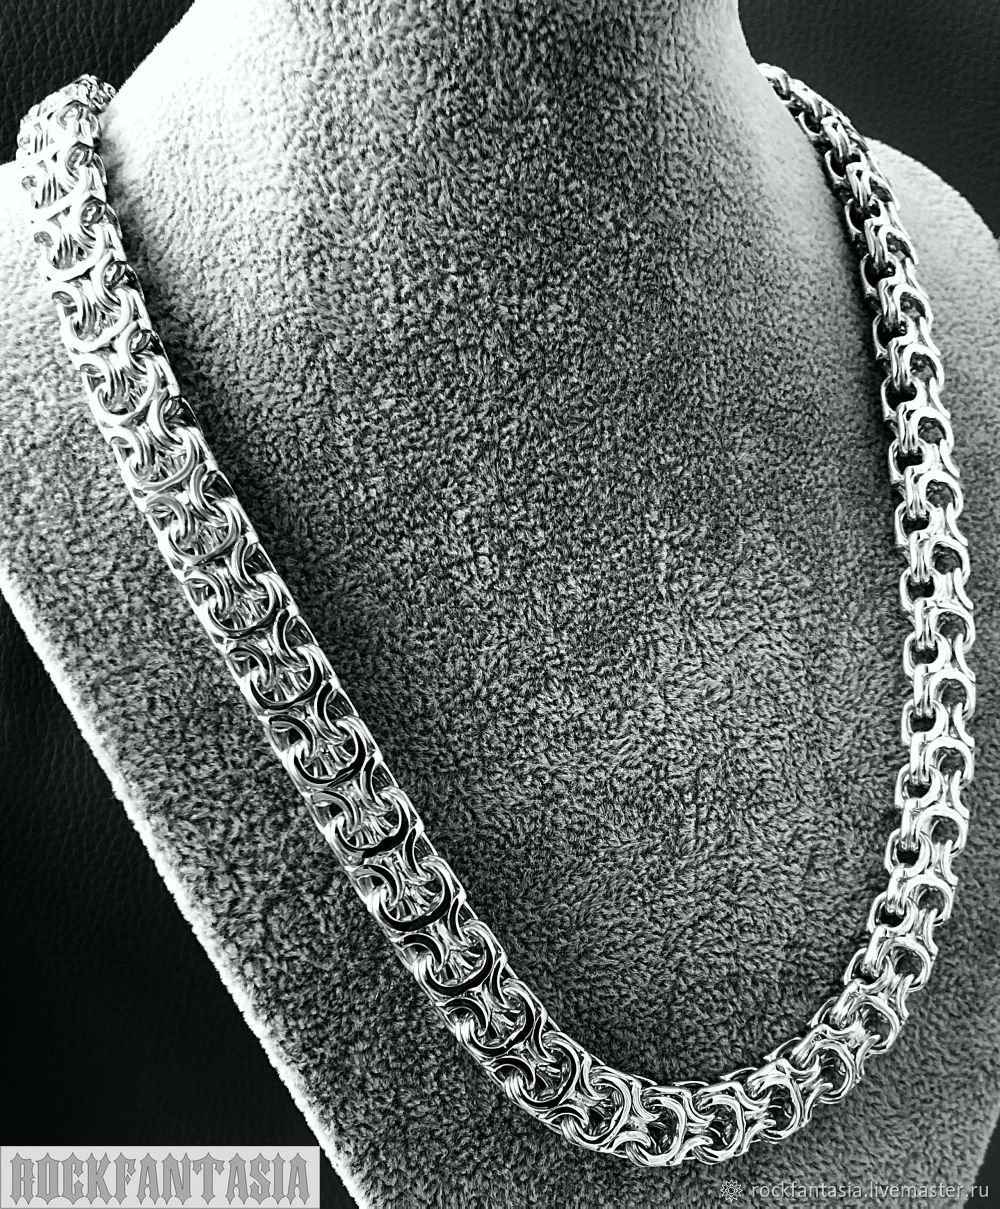 Мужская серебряная цепочка на шею фото